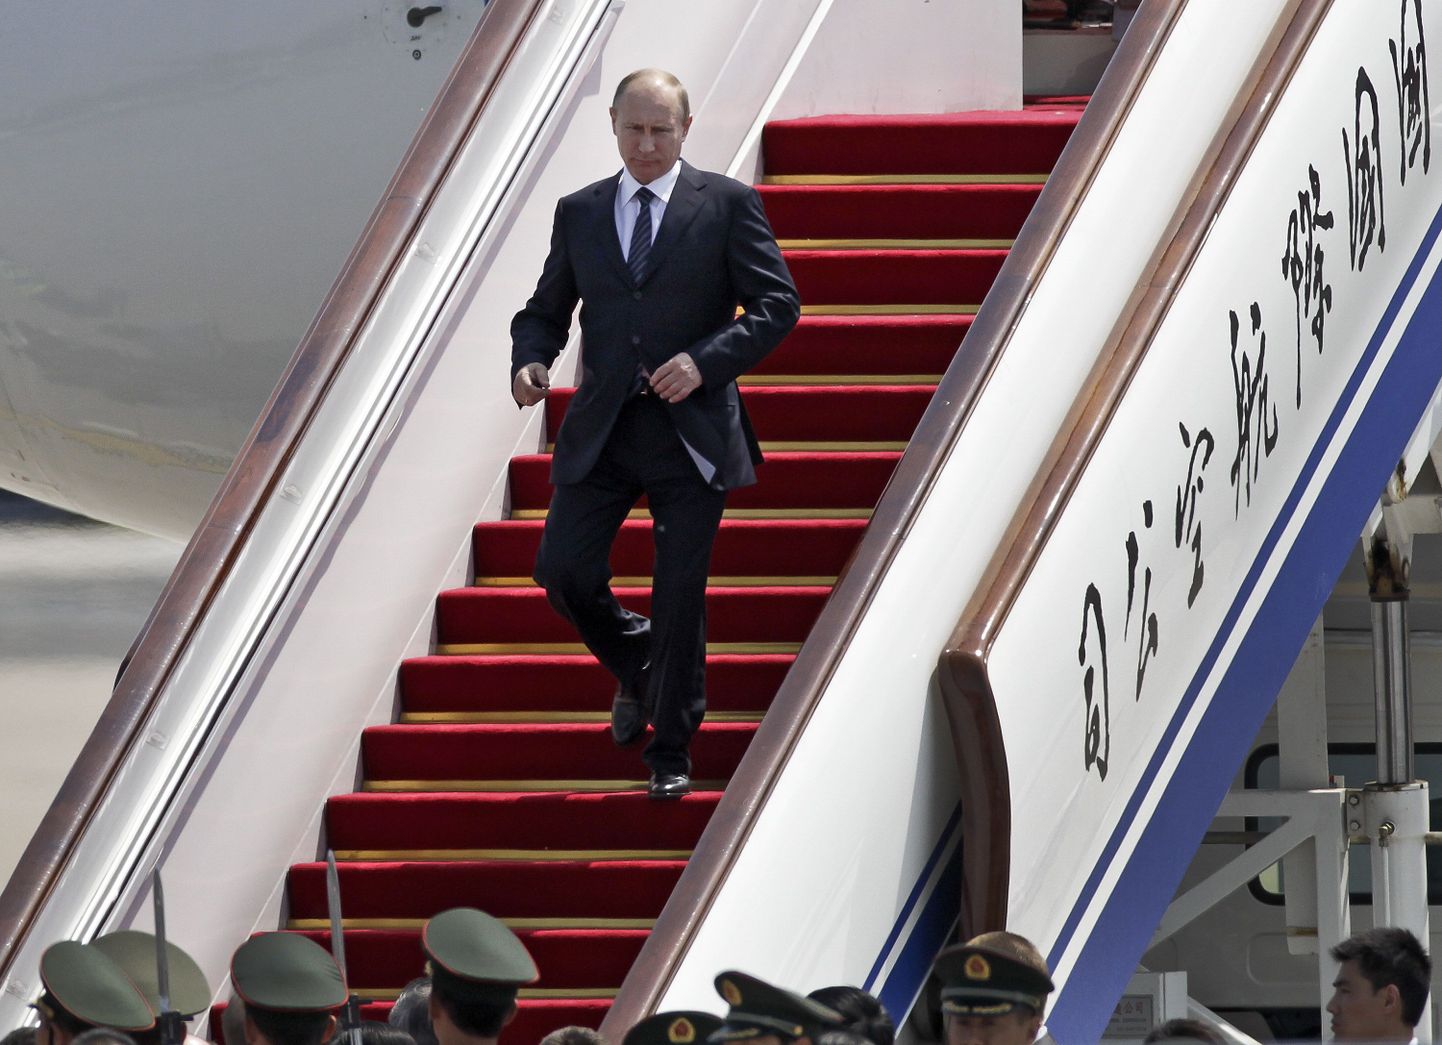 Vene president Vladimir Putin astub lennukitrepist alla Pekingis.